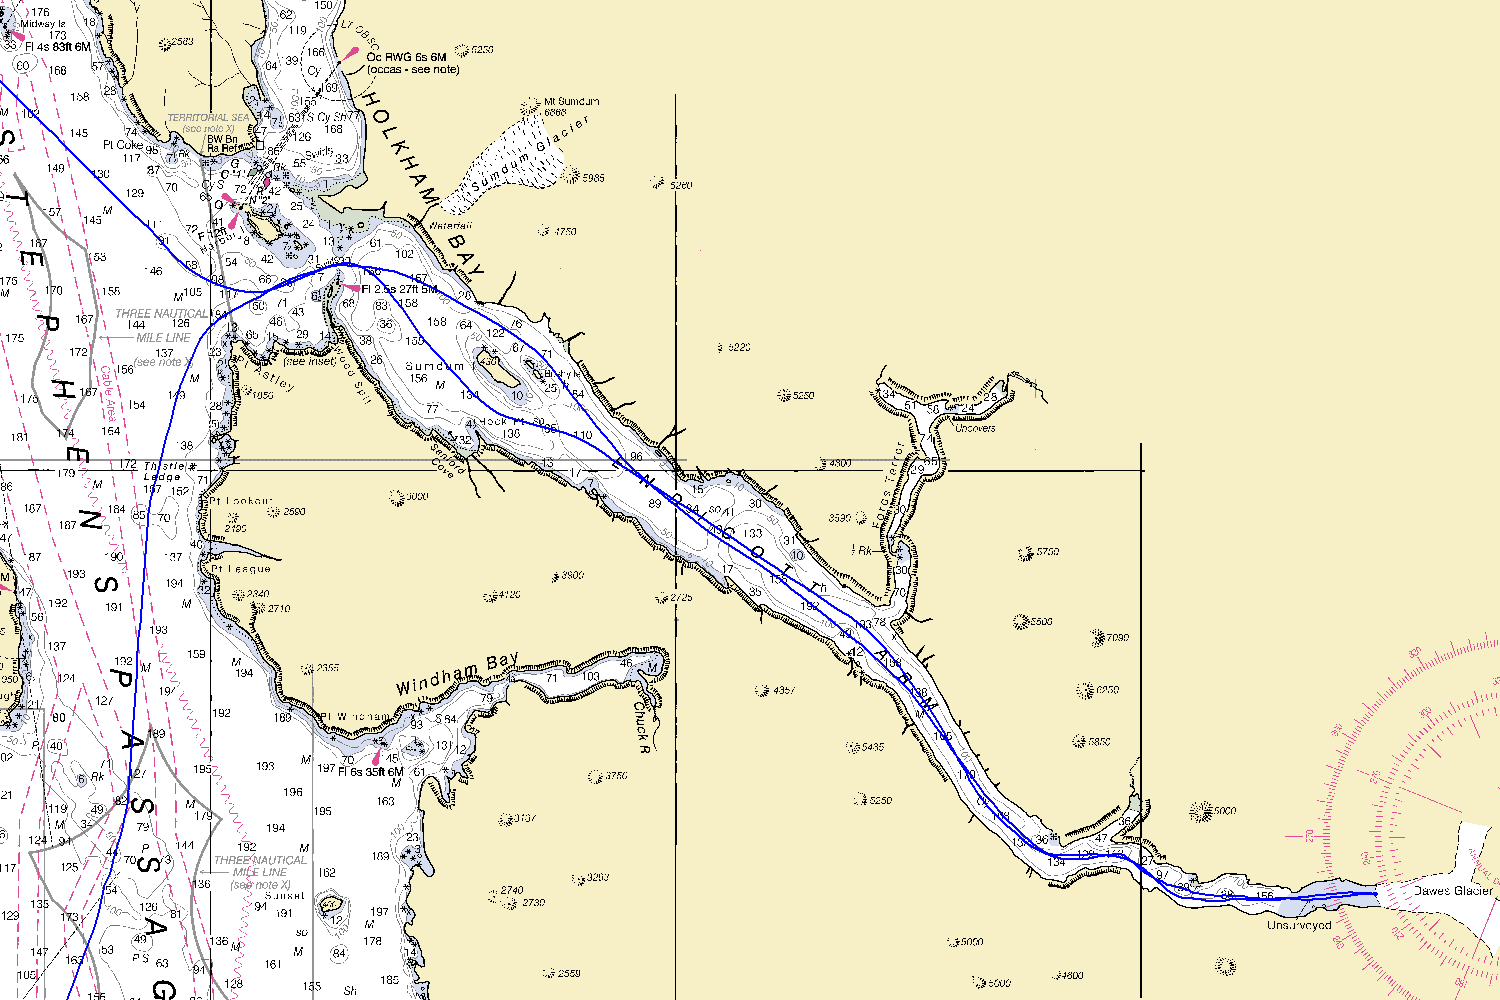 Endicott Arm Navigational Map